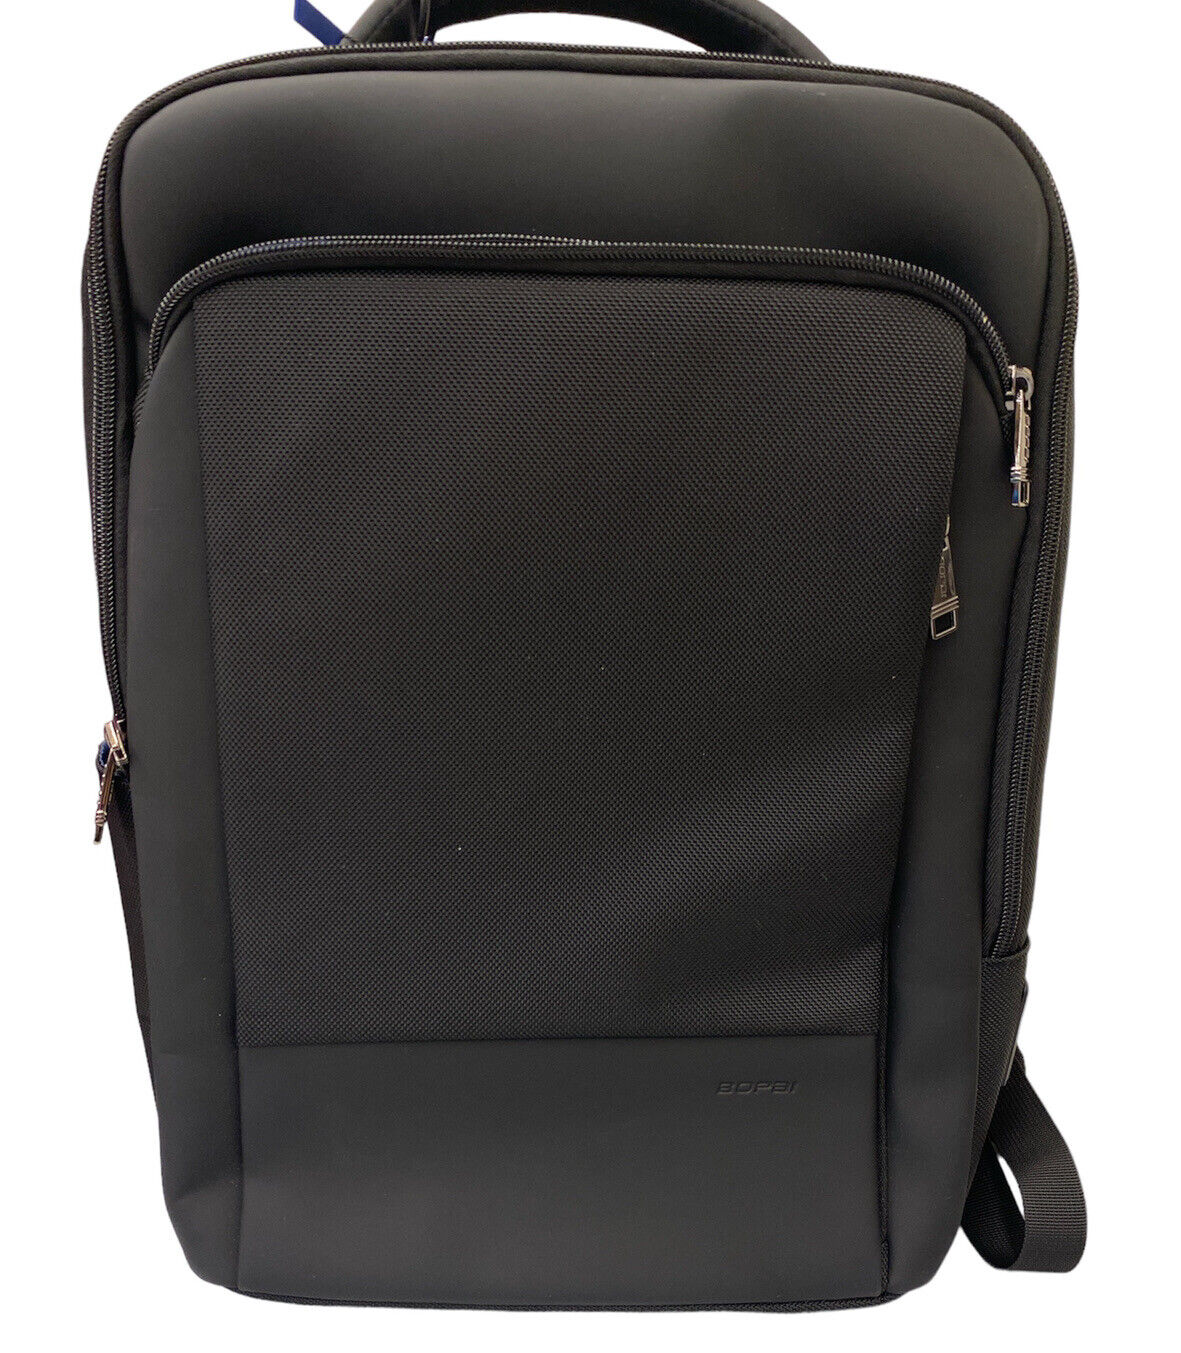 BOPAI Super Slim Laptop Backpack Men’s Backpack - NEW Travel Business School